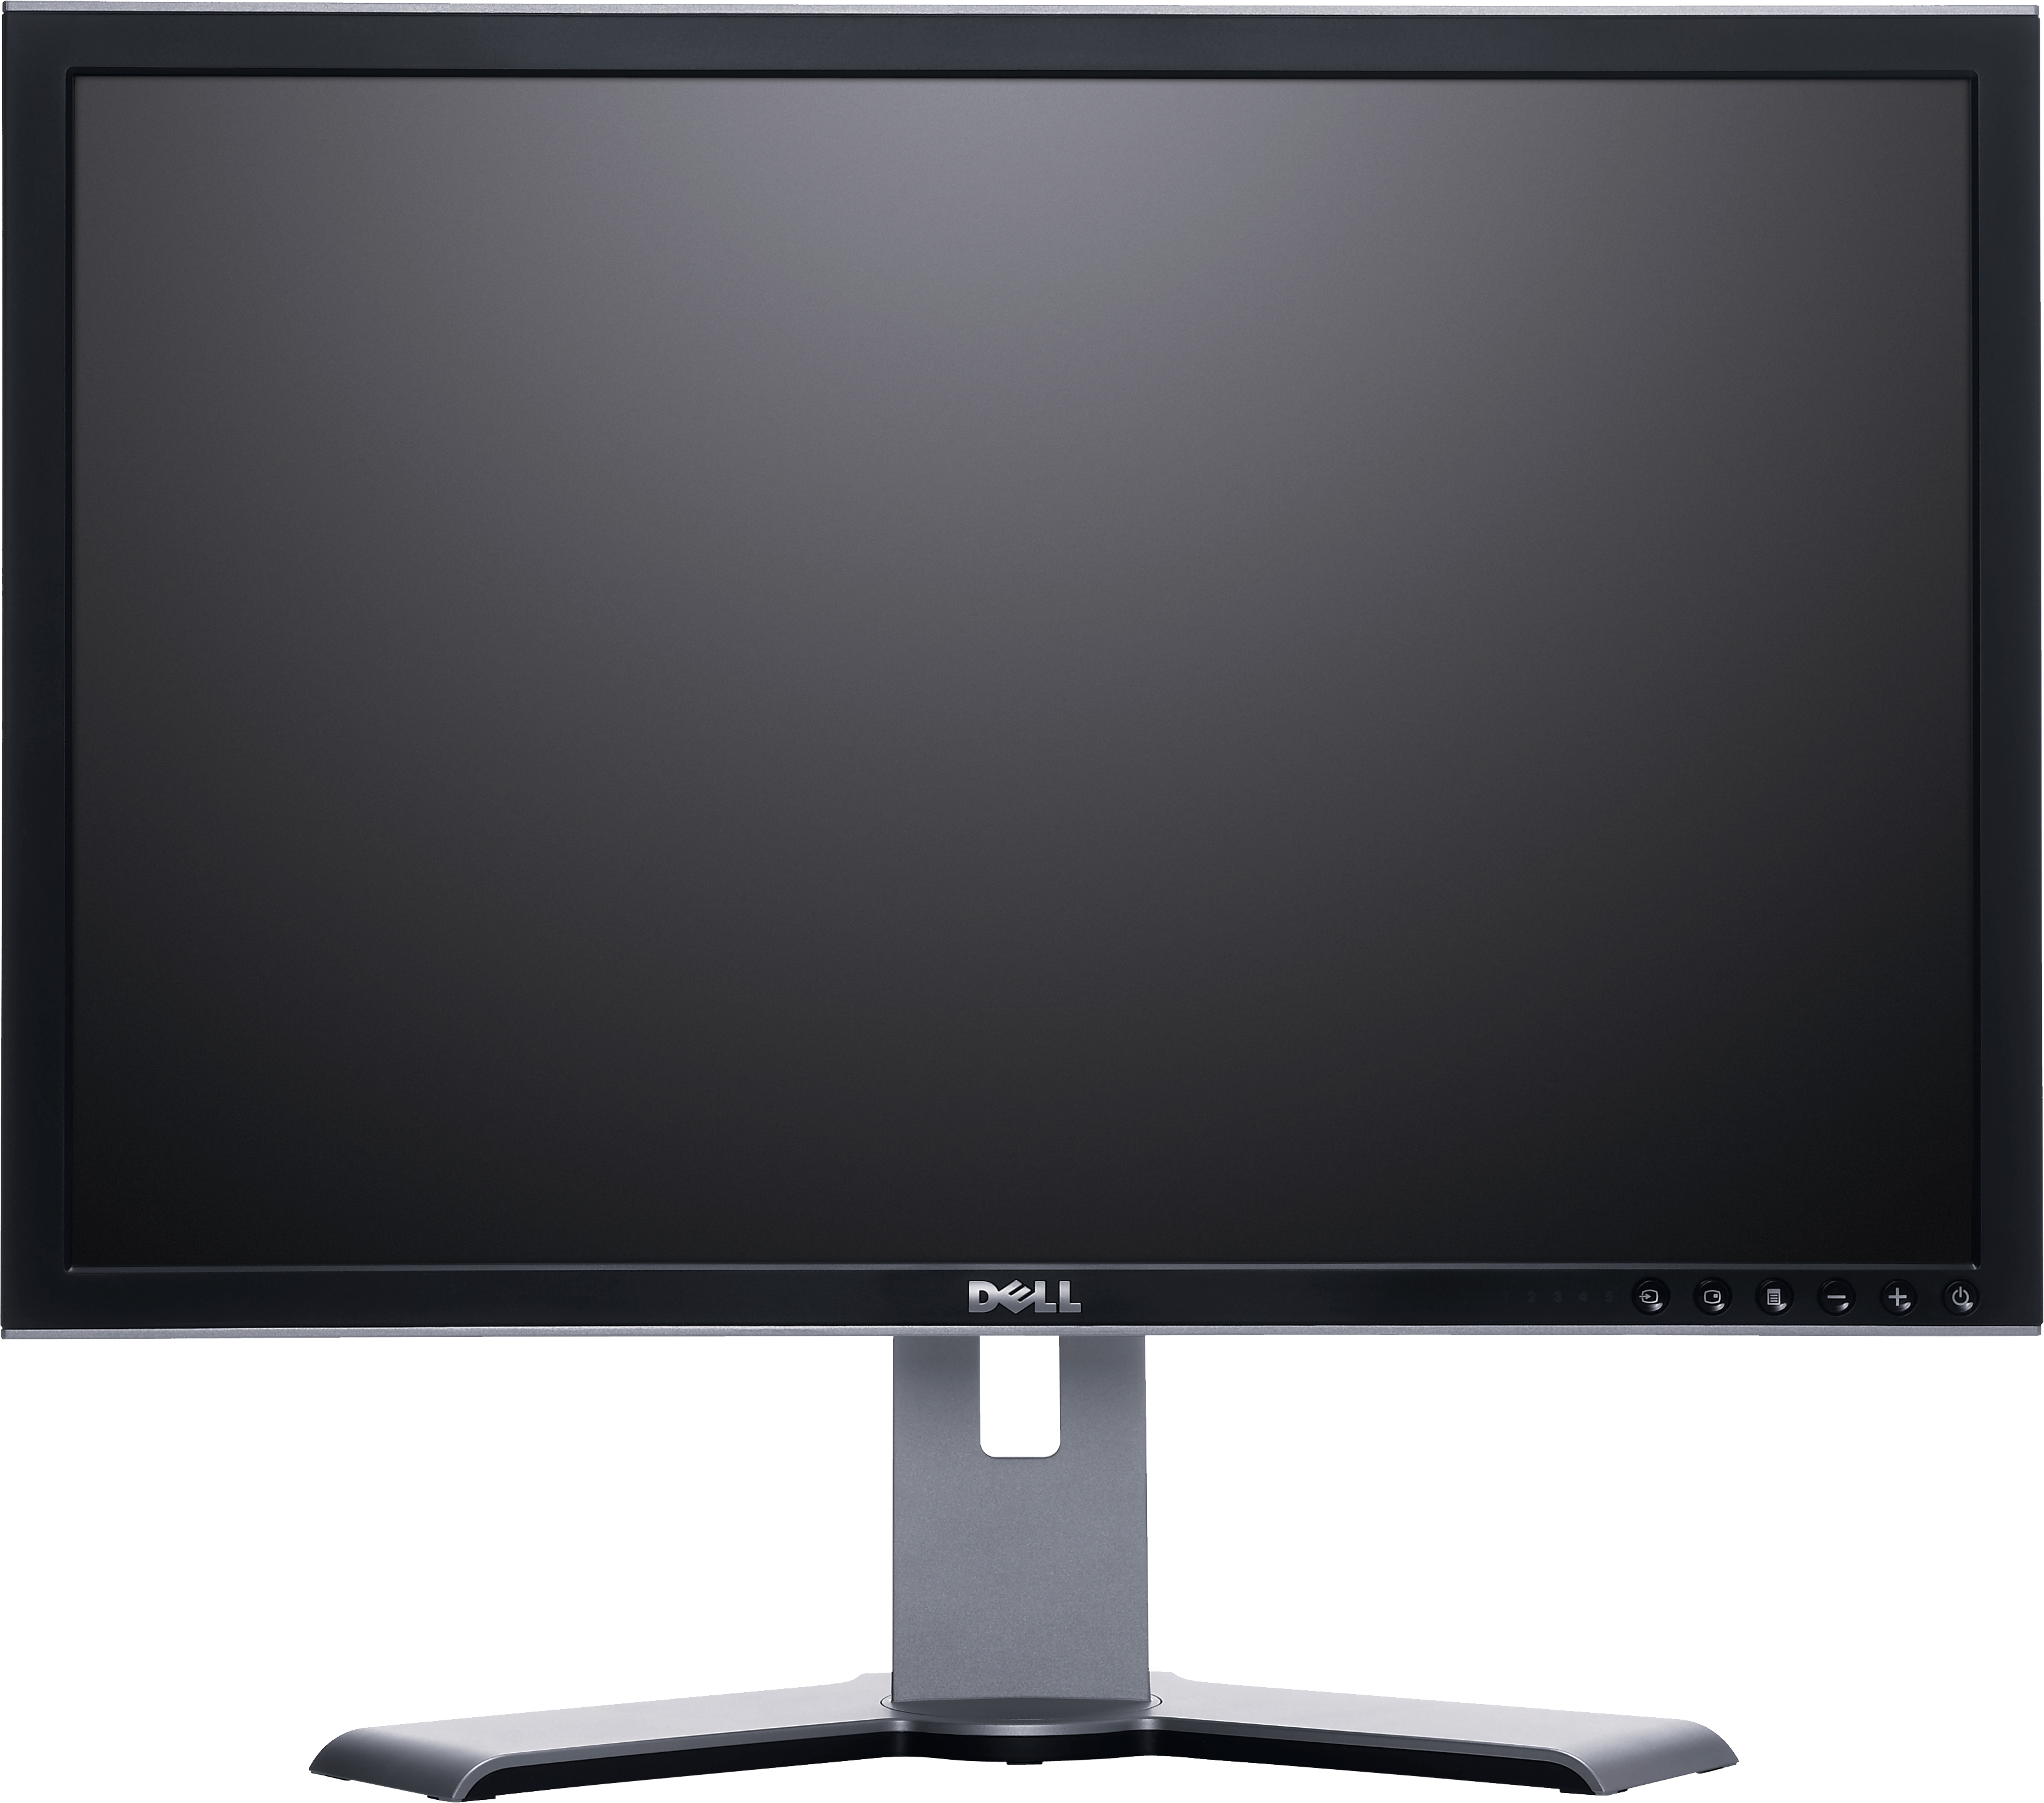 Computer screen background